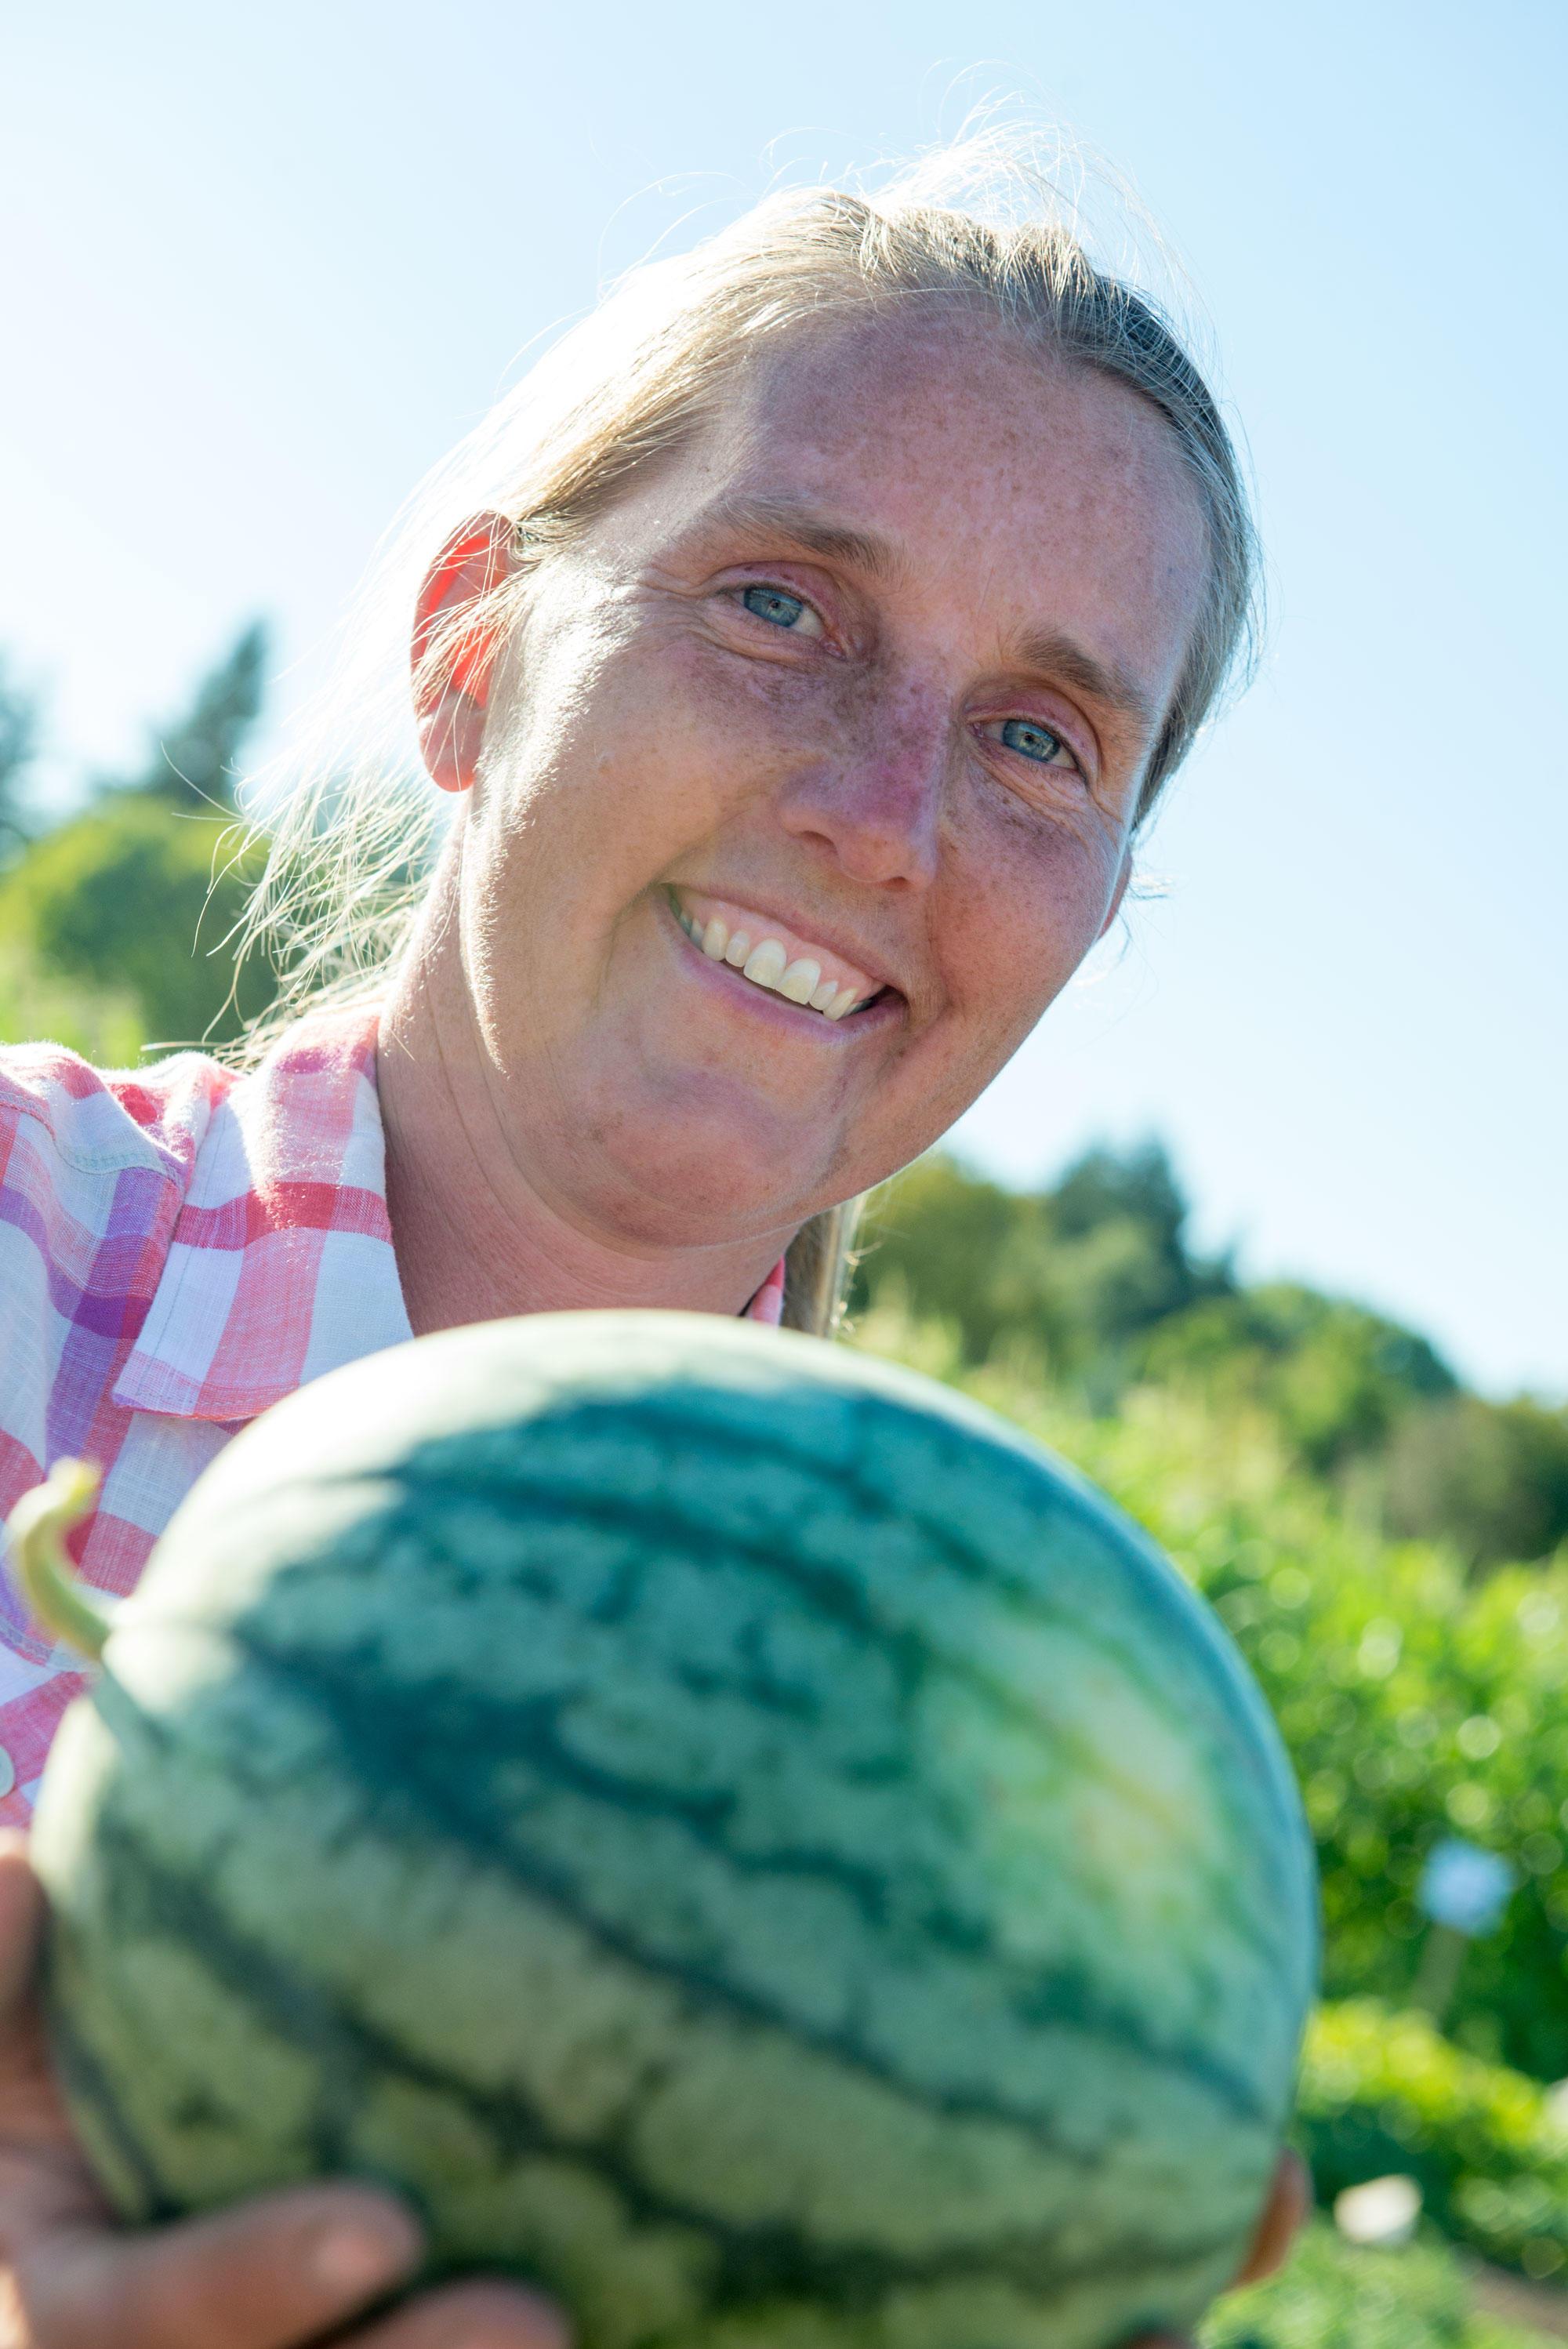 Heidi Noordijk smiles while holding a small watermelon.